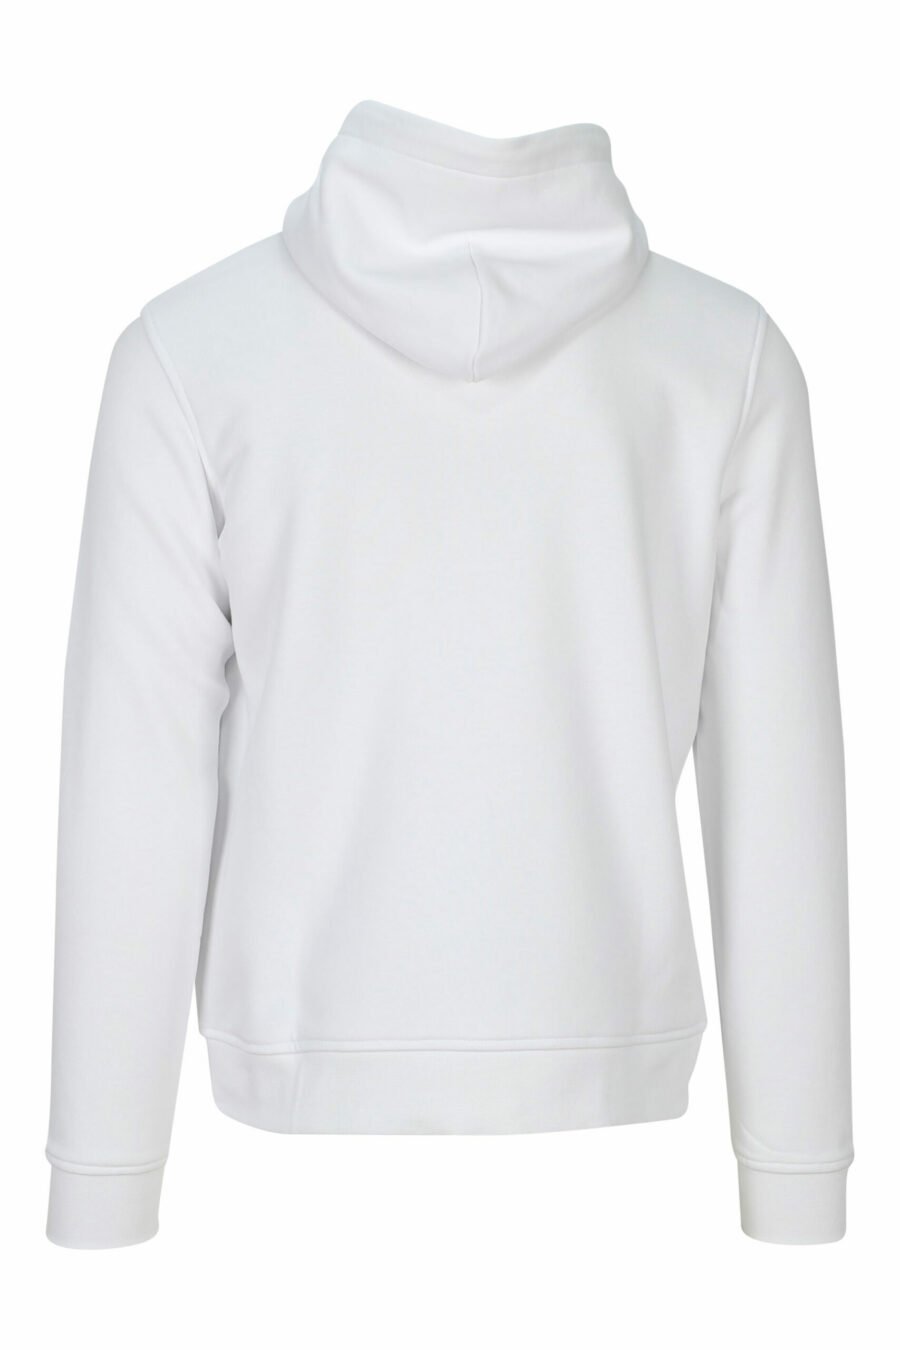 White hooded sweatshirt with monochrome rubber mini-logo - 4062226393331 1 scaled